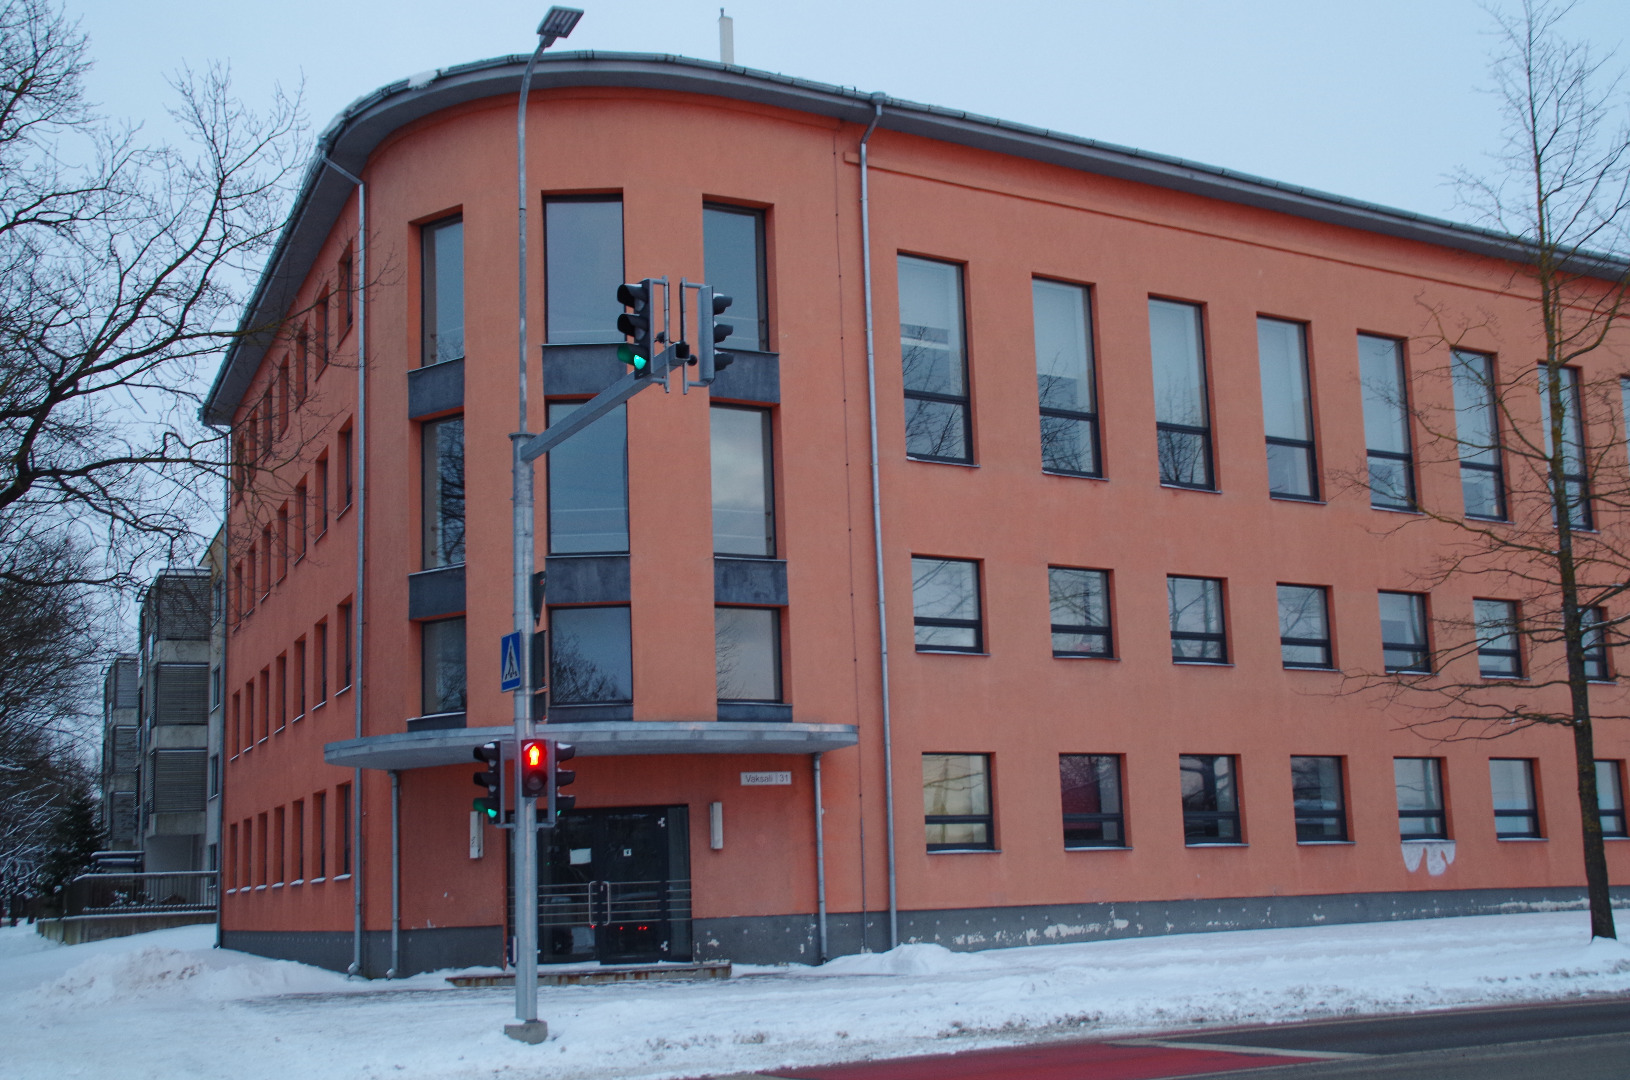 Administrative Building of Tartu PTK rephoto